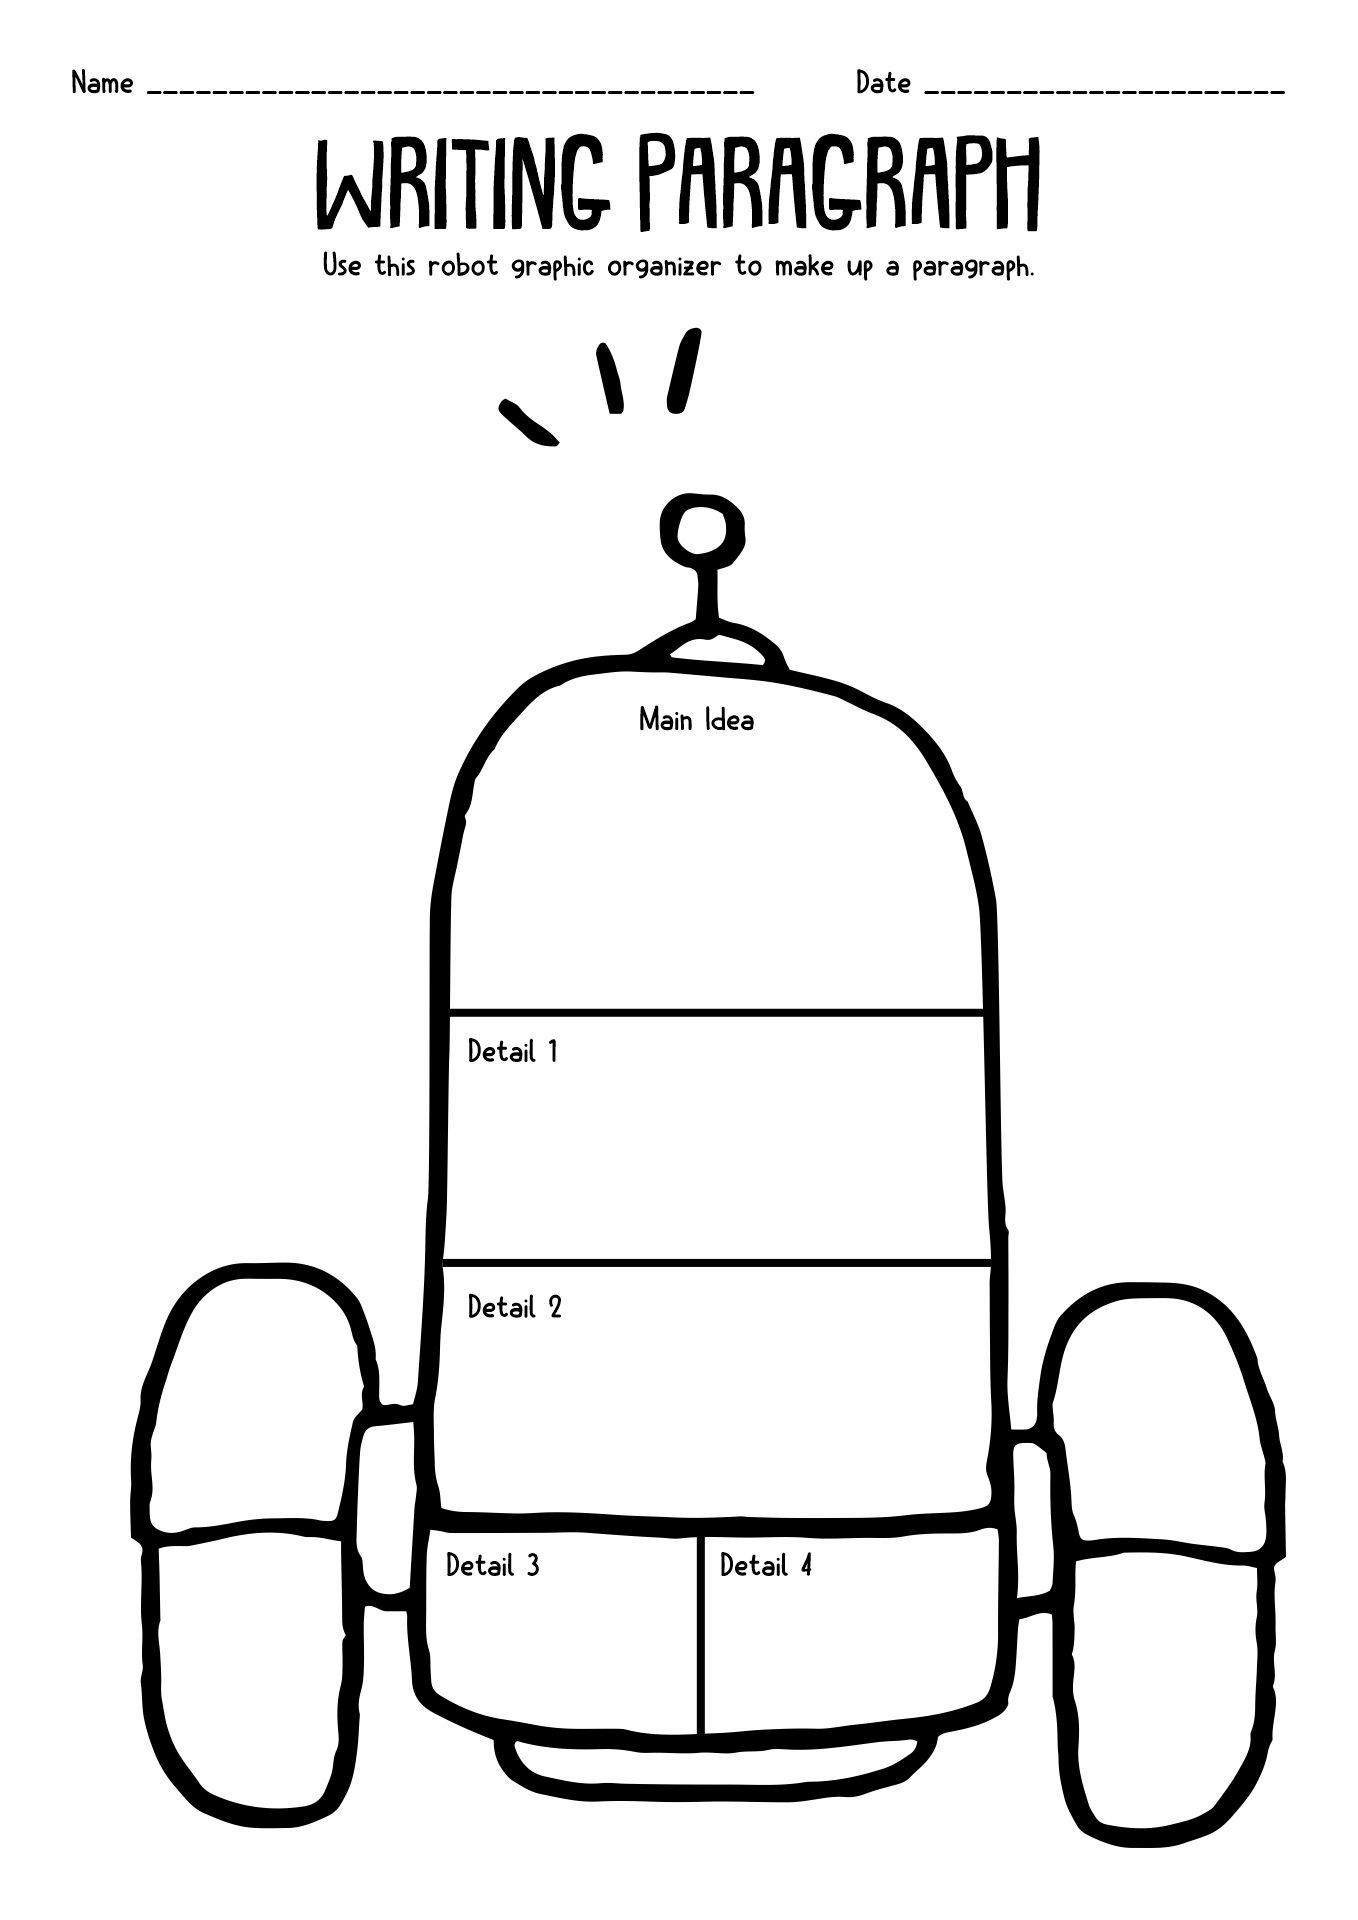 Robot Writing Graphic Organizer Image